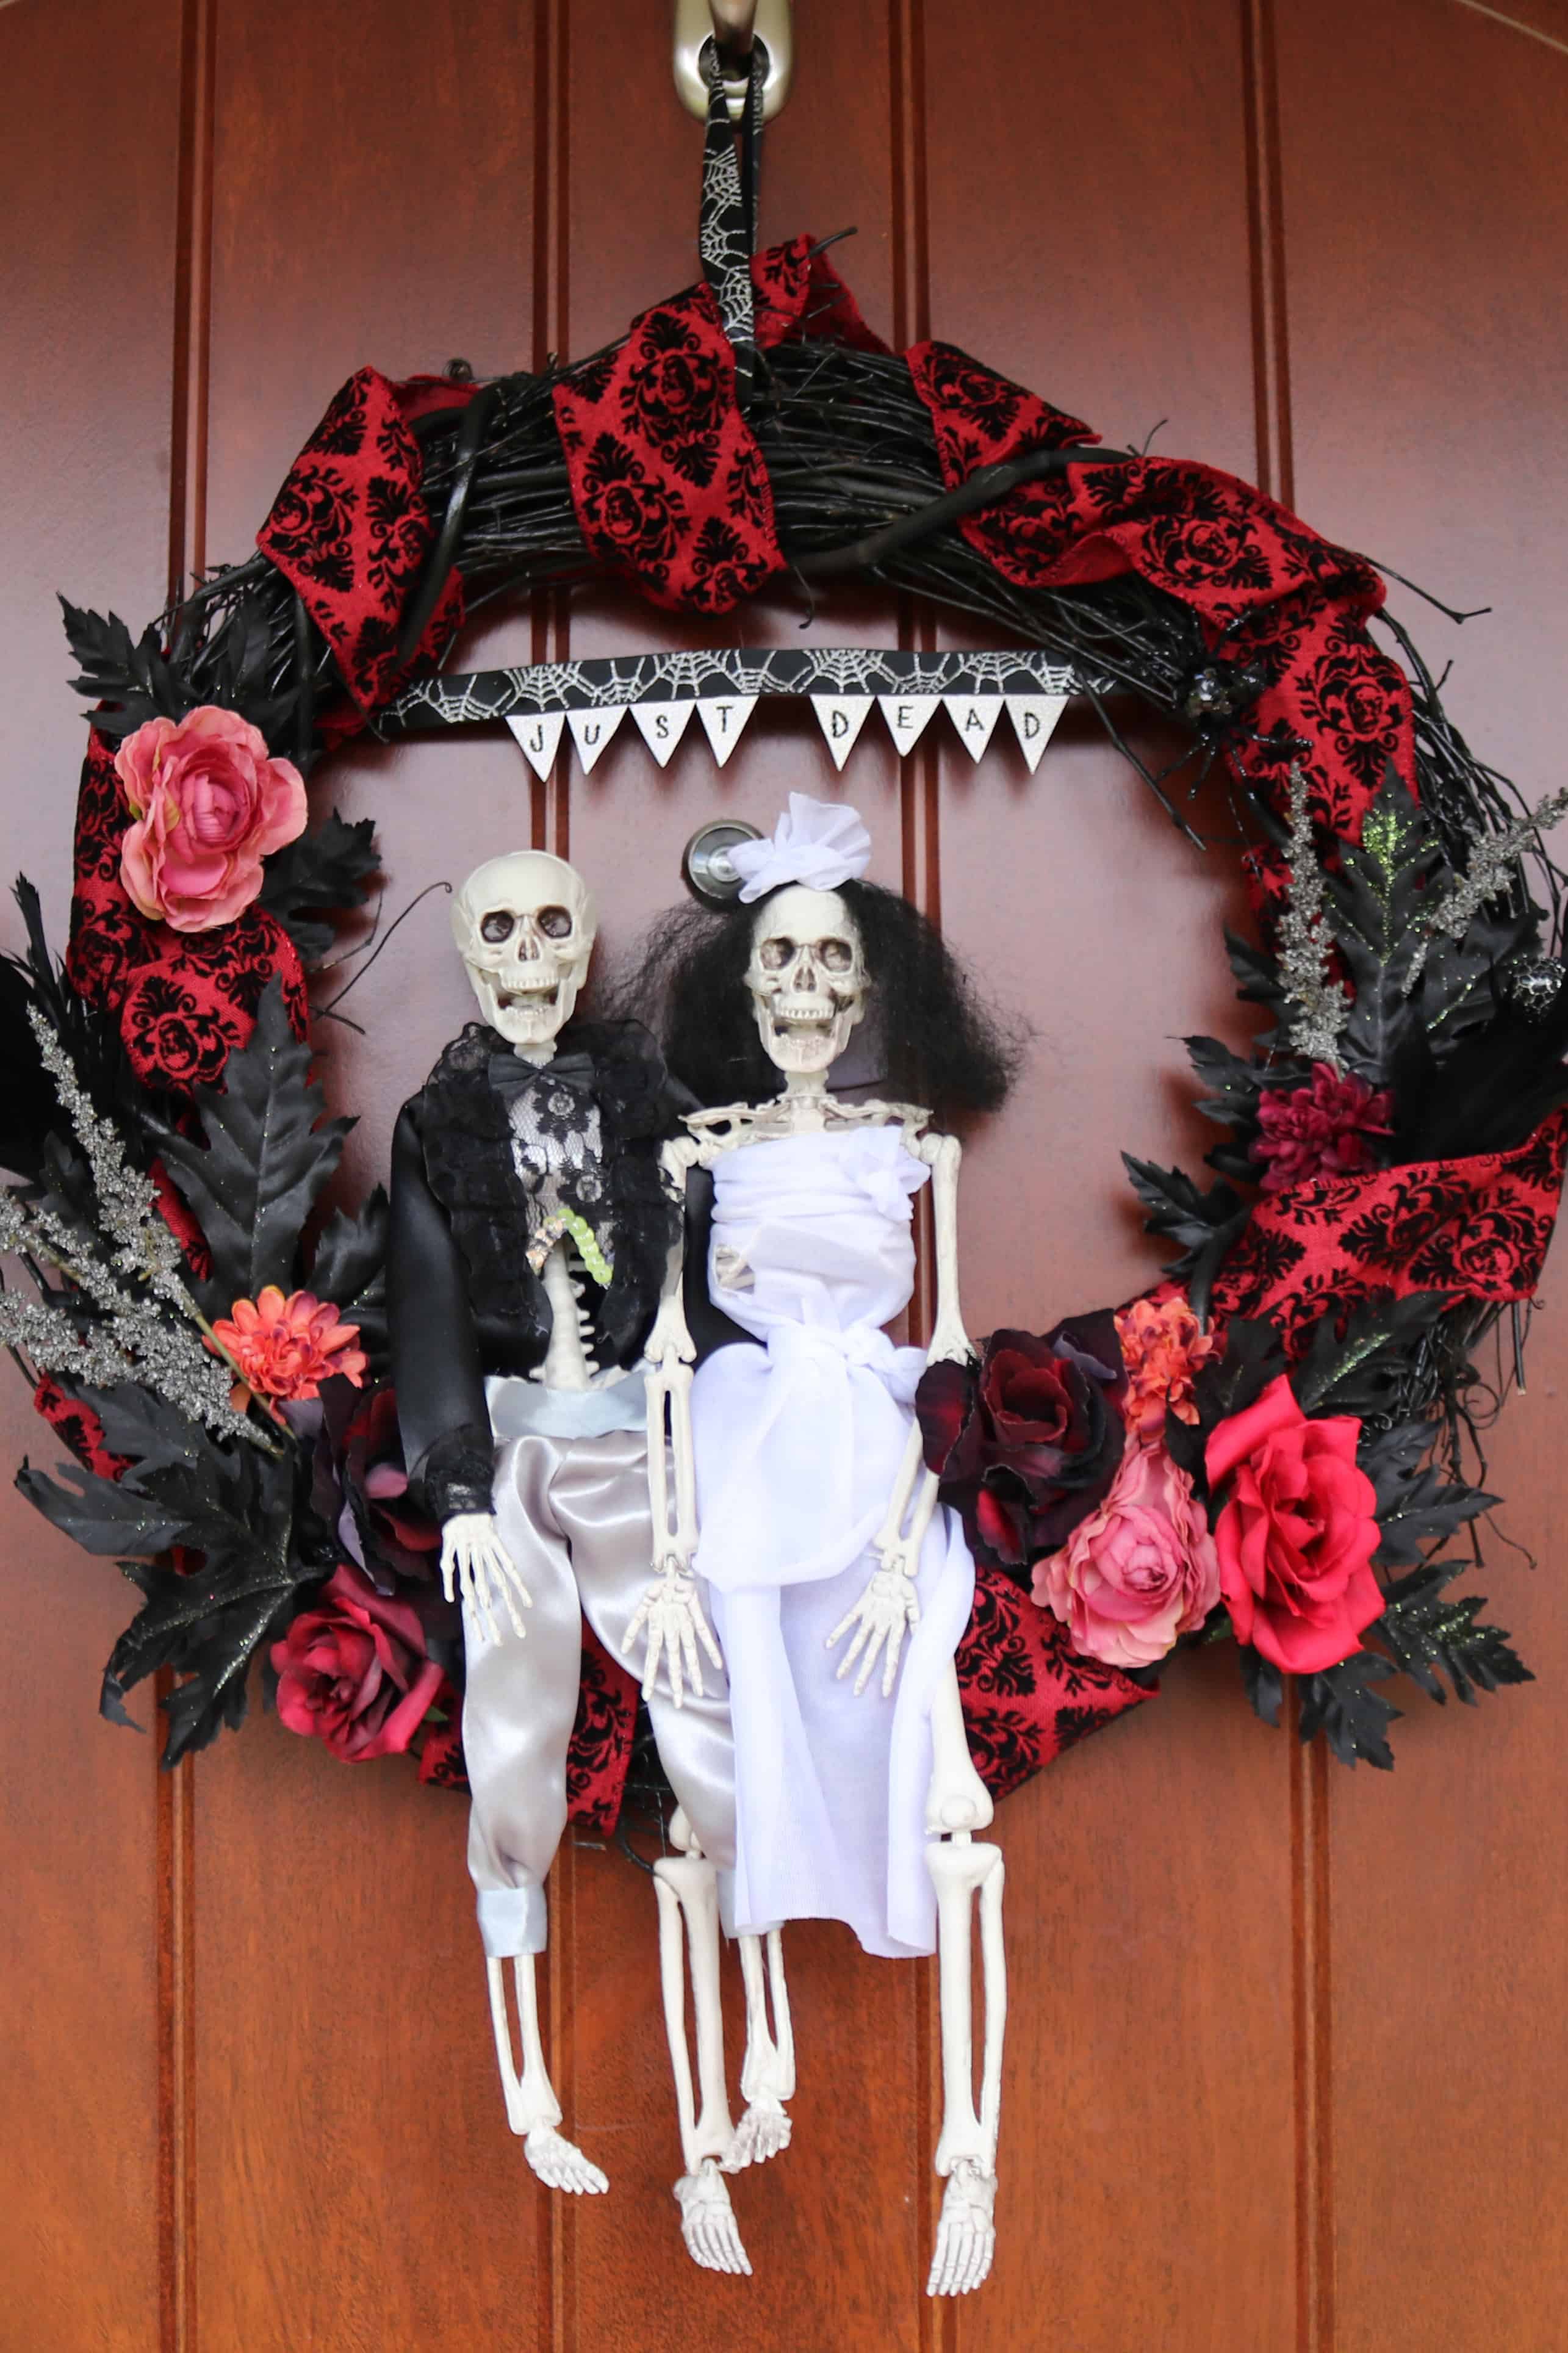 DIY “Just Dead” Skeleton Bride and Groom Halloween Wreath